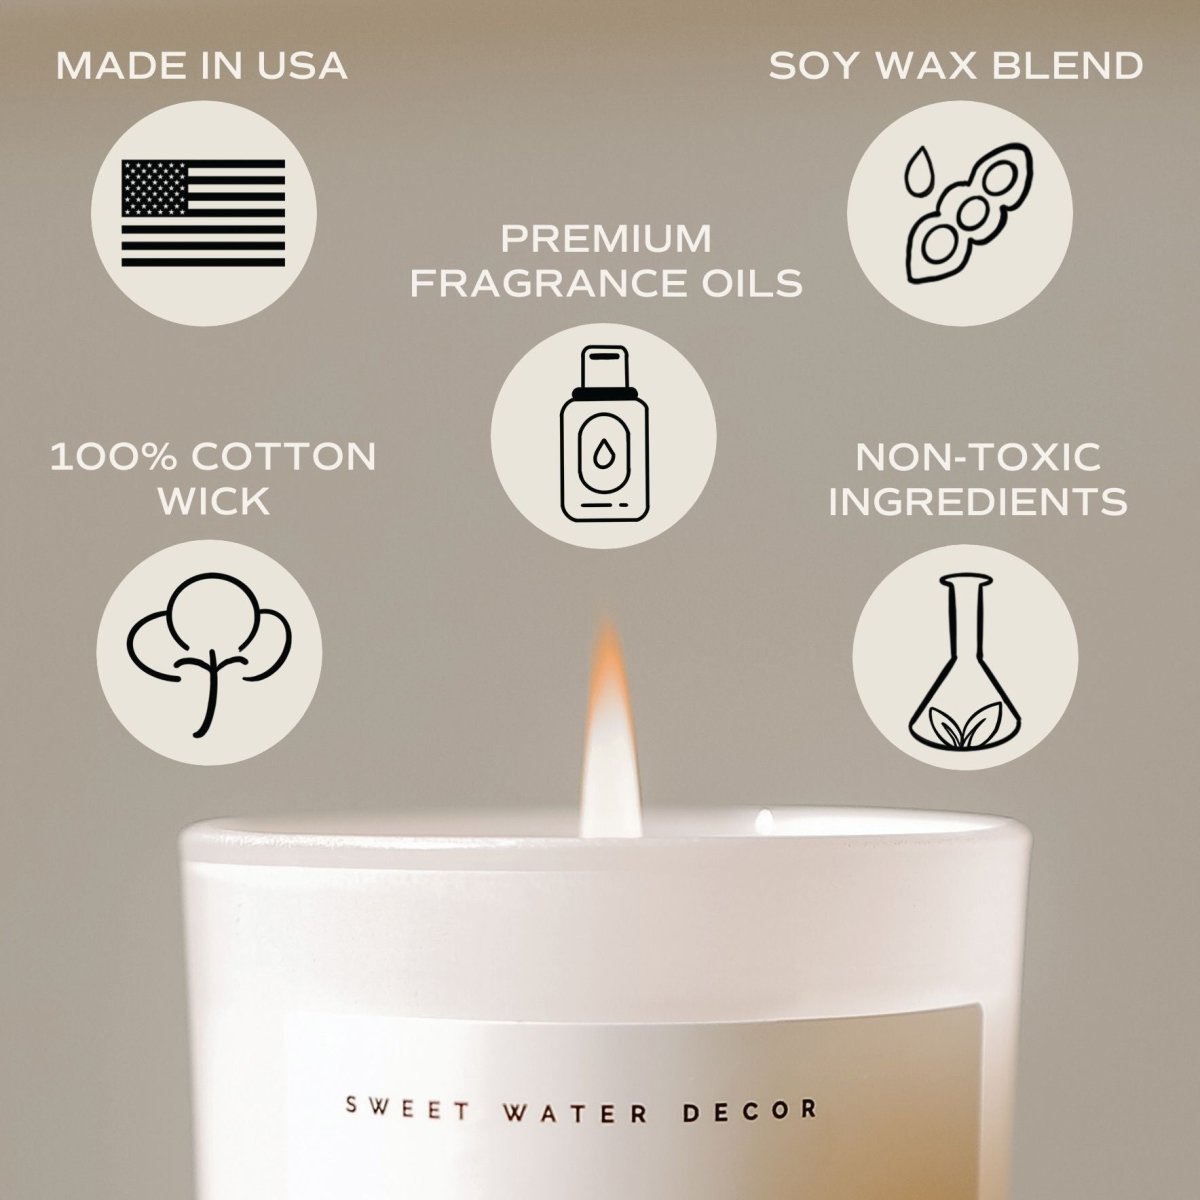 Sweet Water Decor Cinnamon Rolls Soy Candle - White Jar - 11 oz - lily & onyx